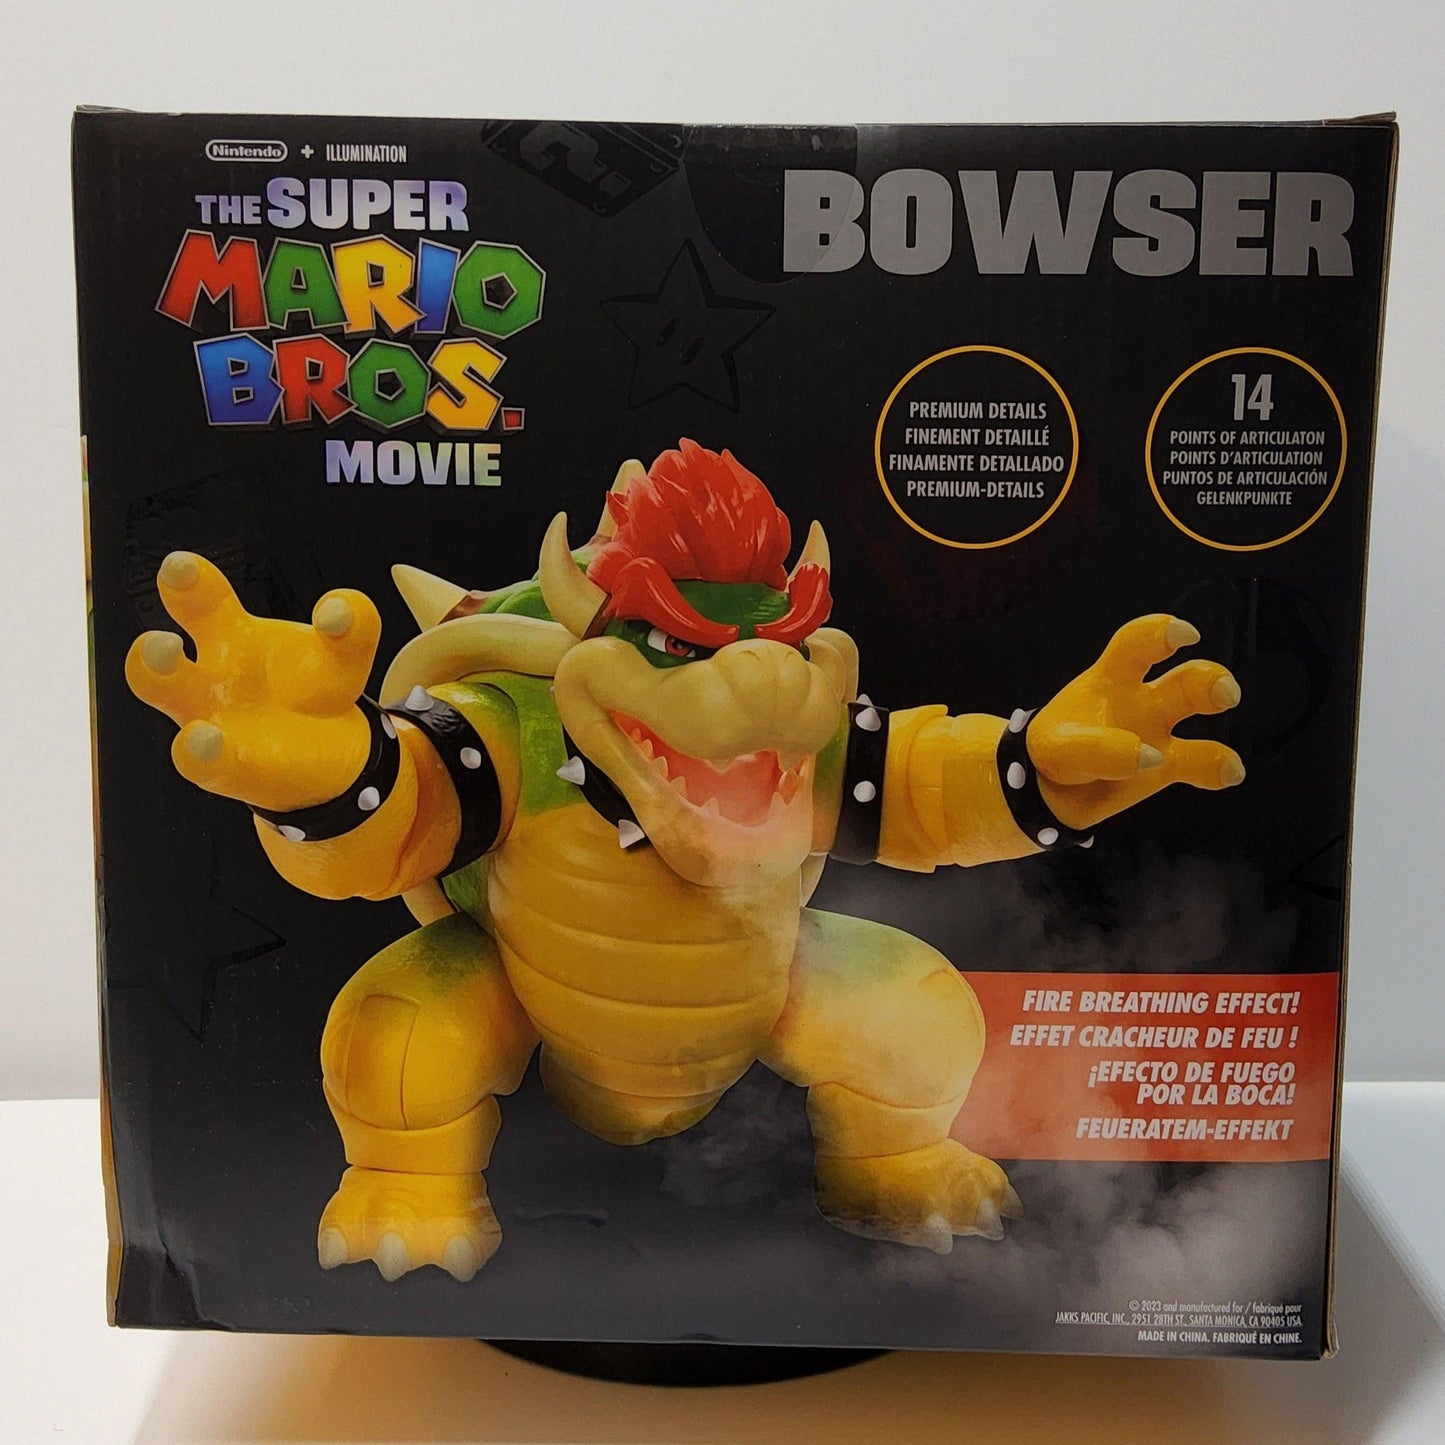 Nintendo + illumination The Super Mario Bros Movie 7" Bowser Action Figure - Logan's Toy Chest